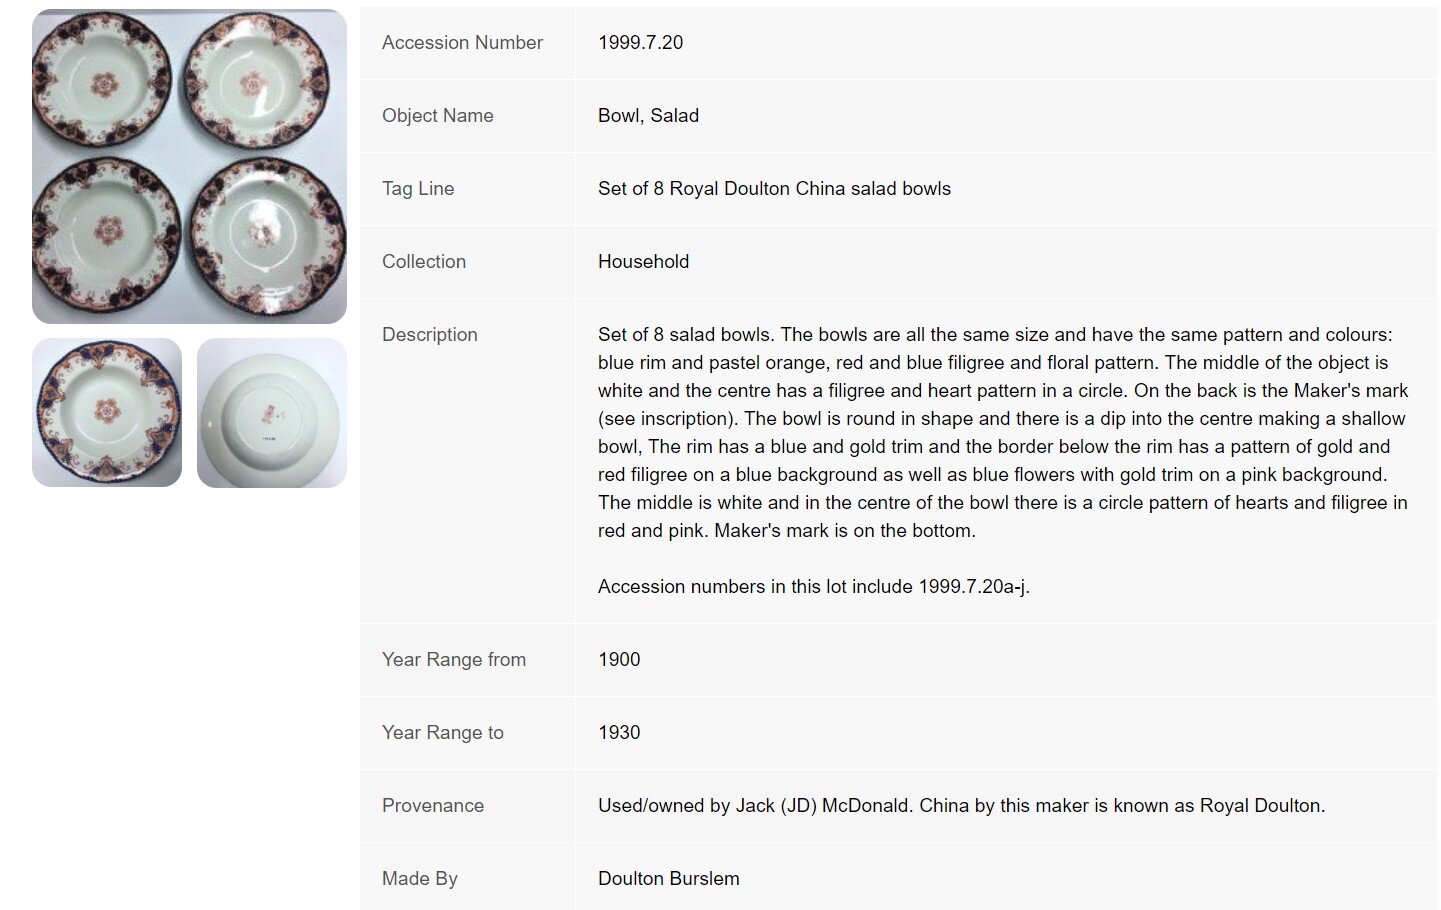  Record for some of JD McDonald’s Royal Doulton china set 